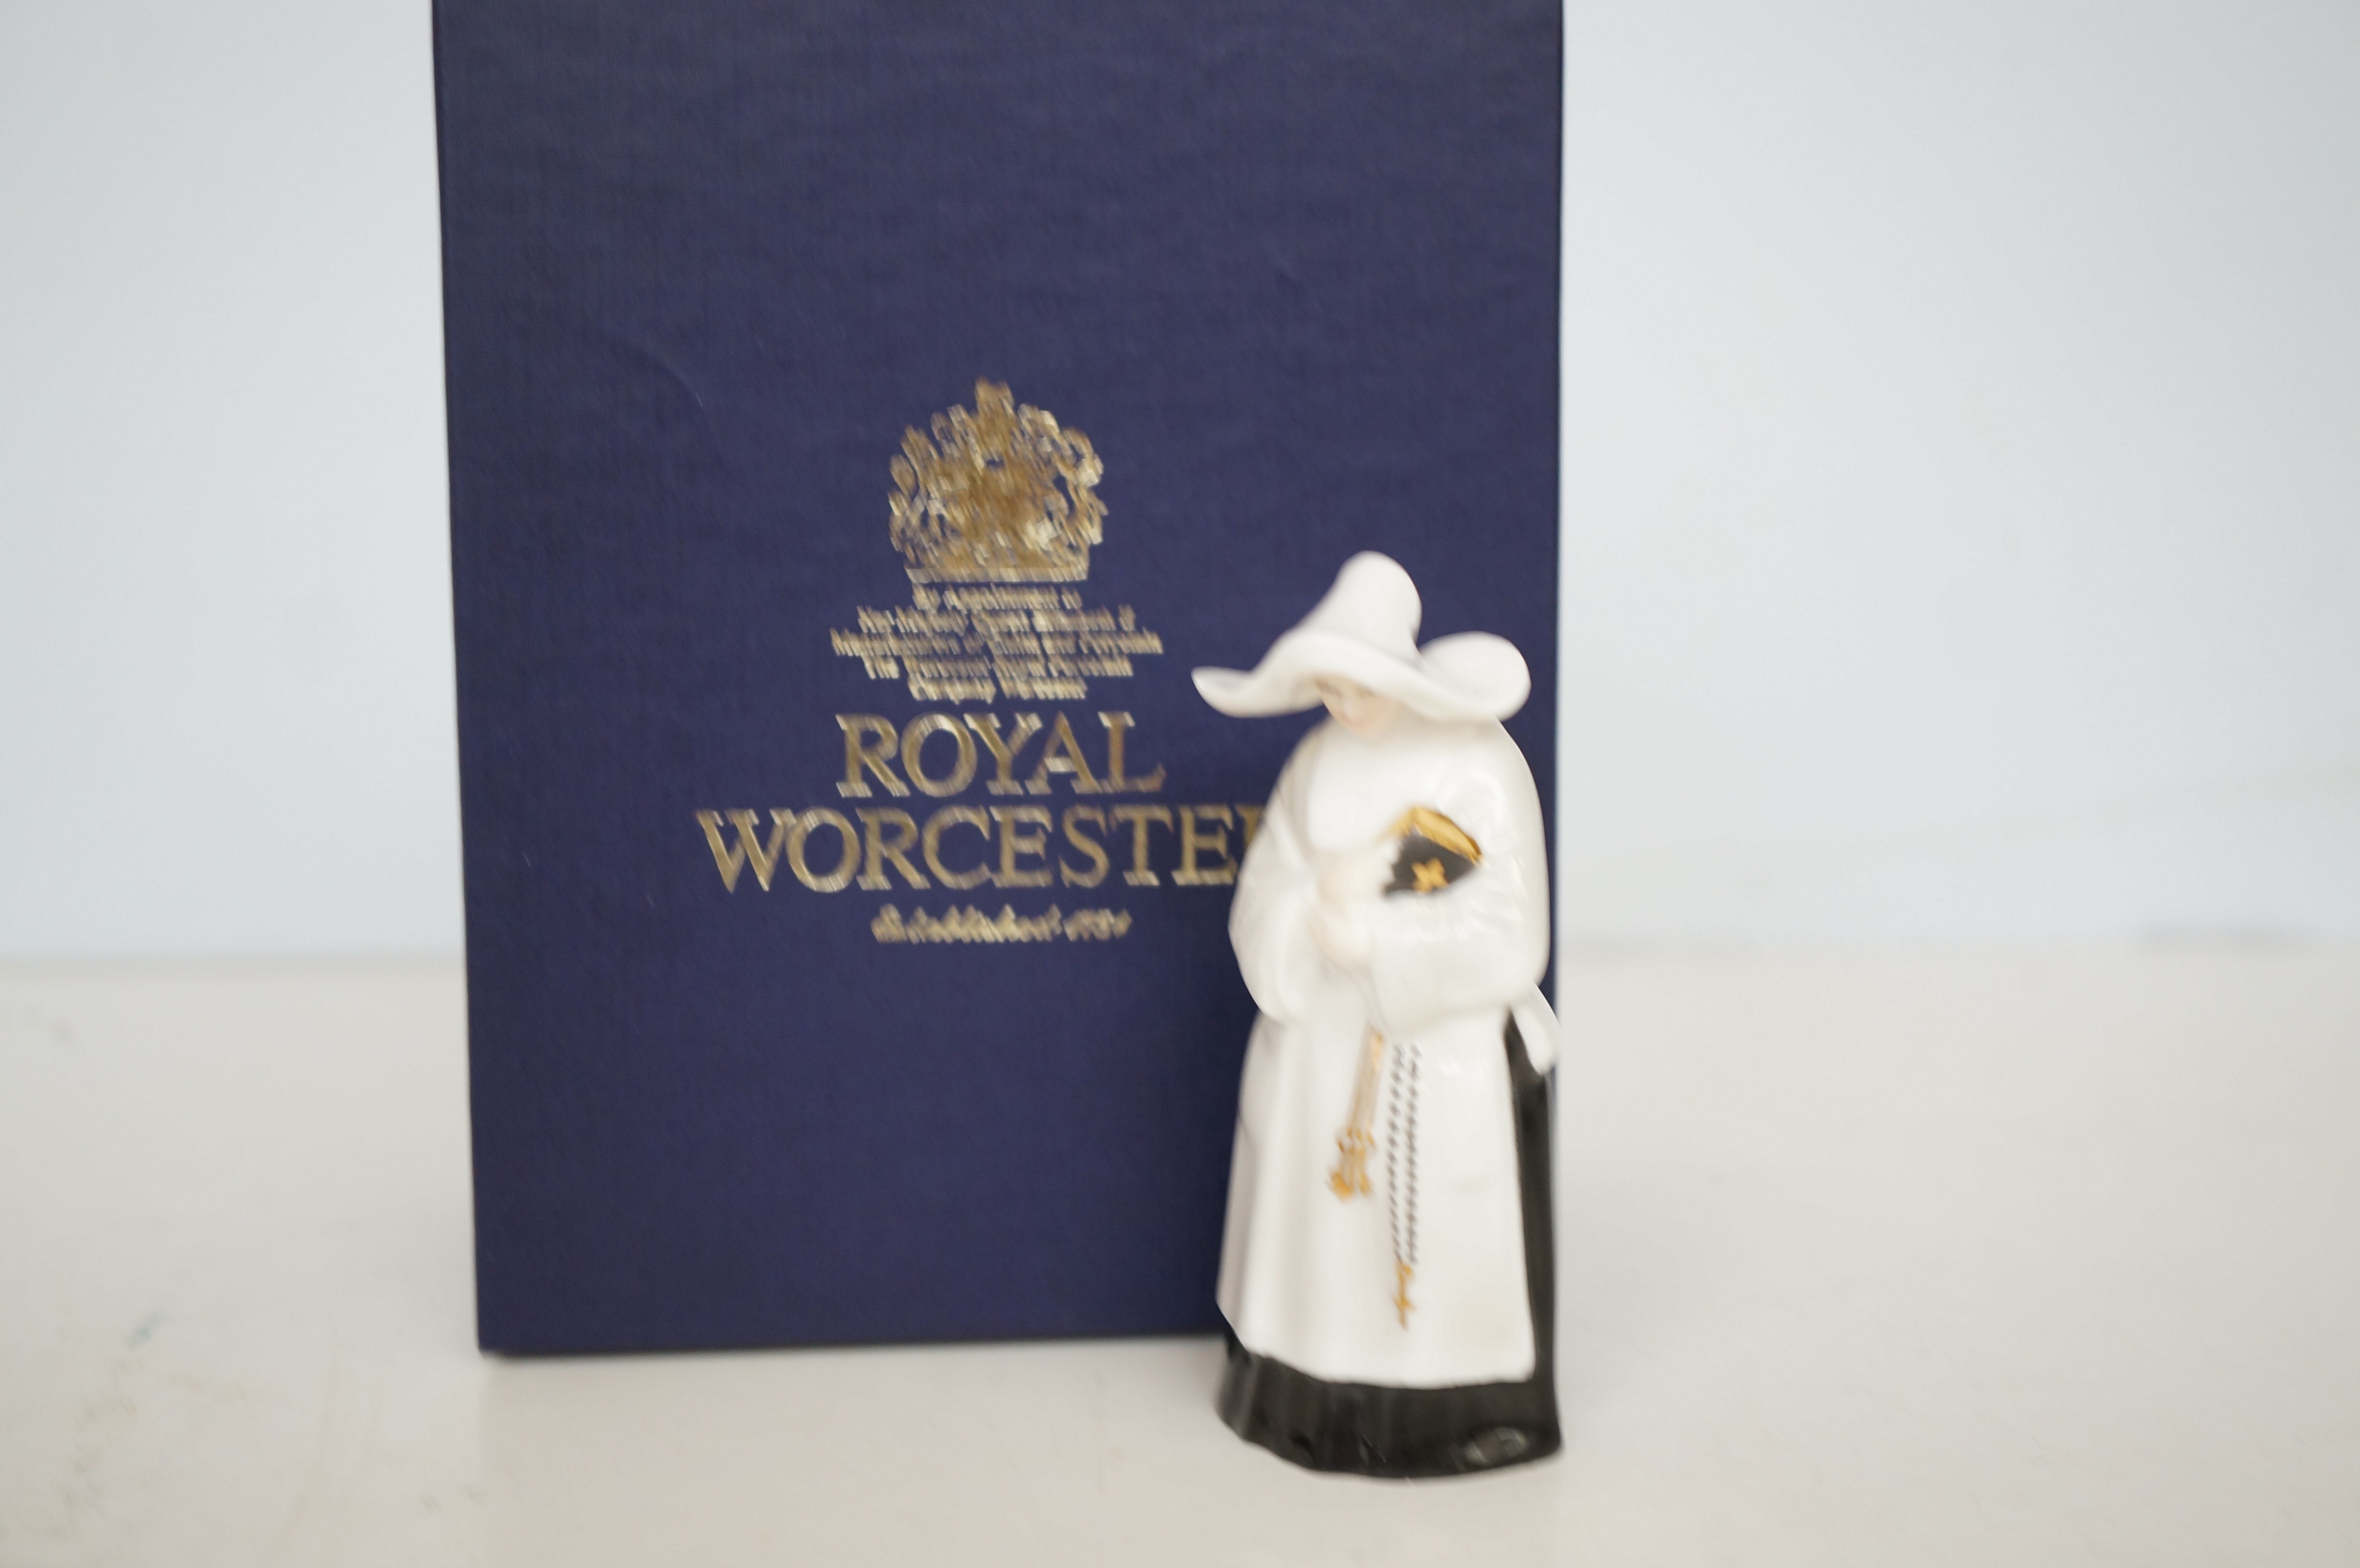 Royal Worcester The connoisseur collection reprodu